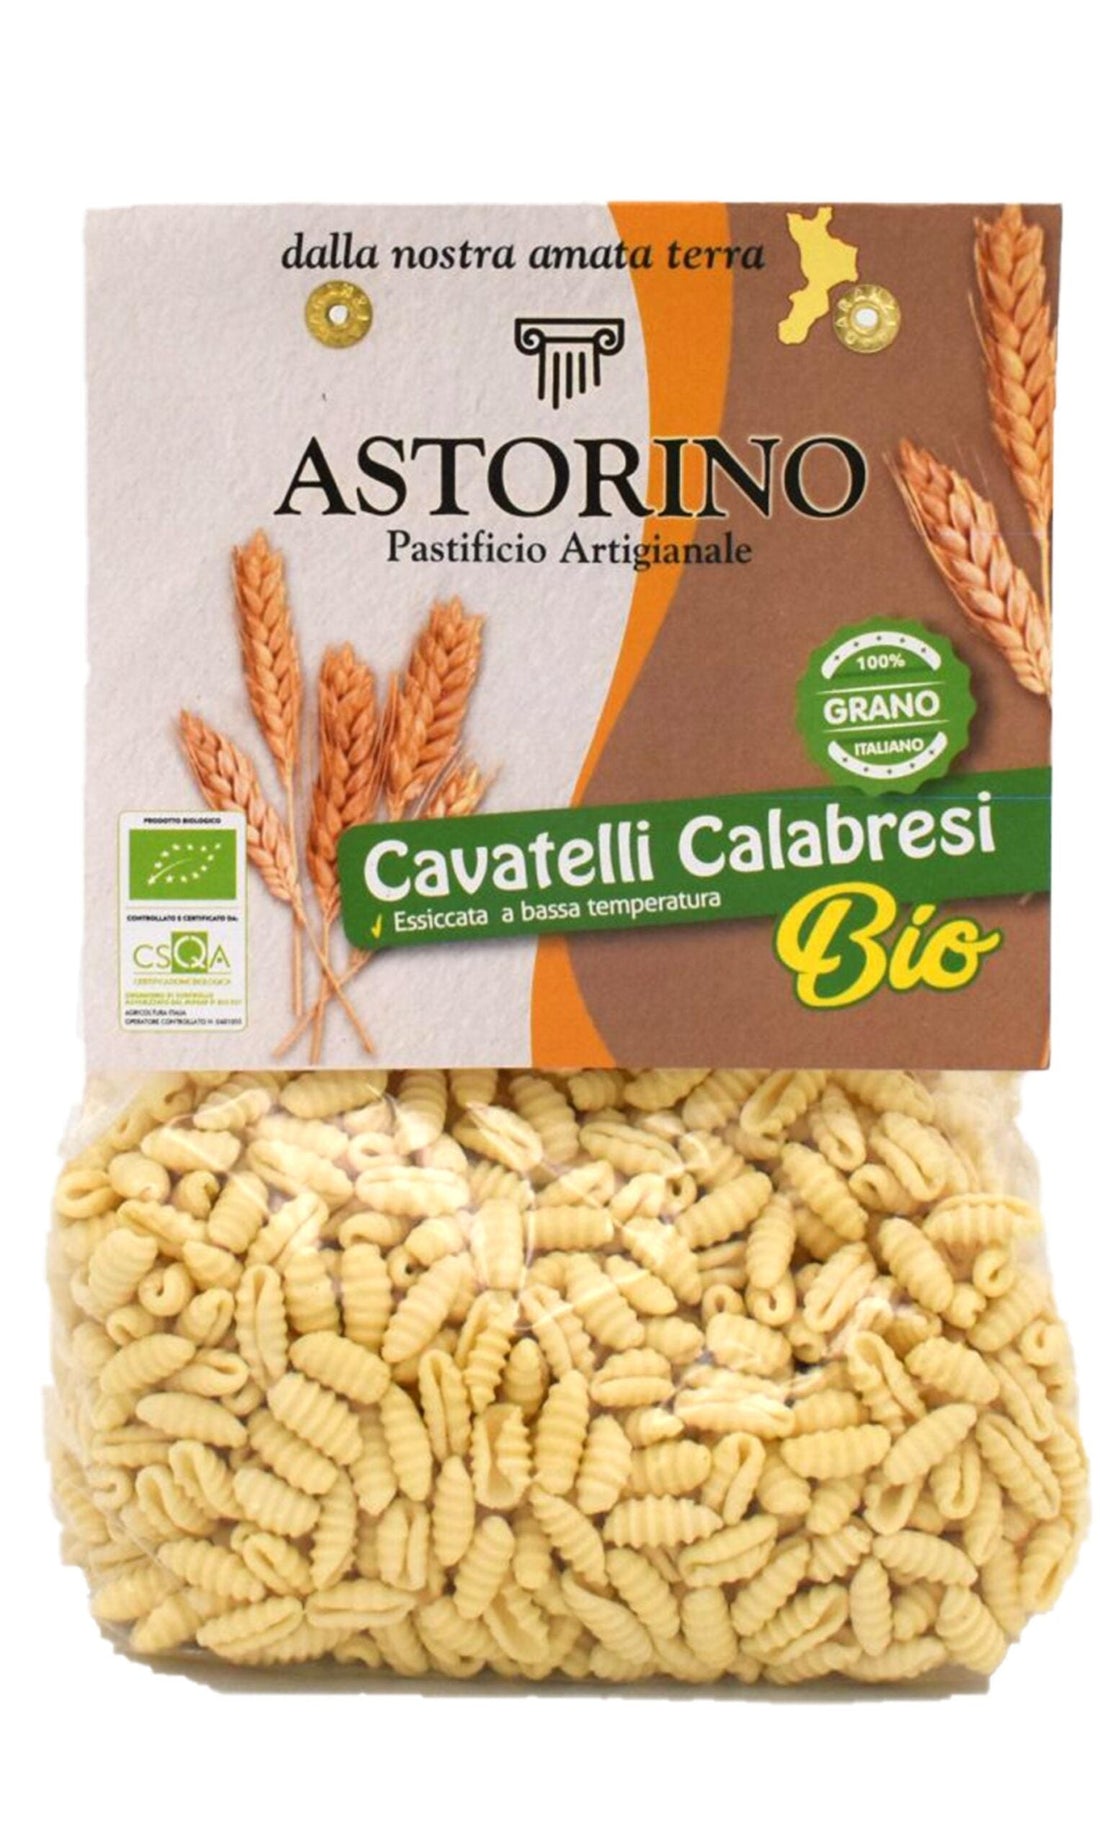 Cavatelli Calabresii biologici Pasta artigianale di grano